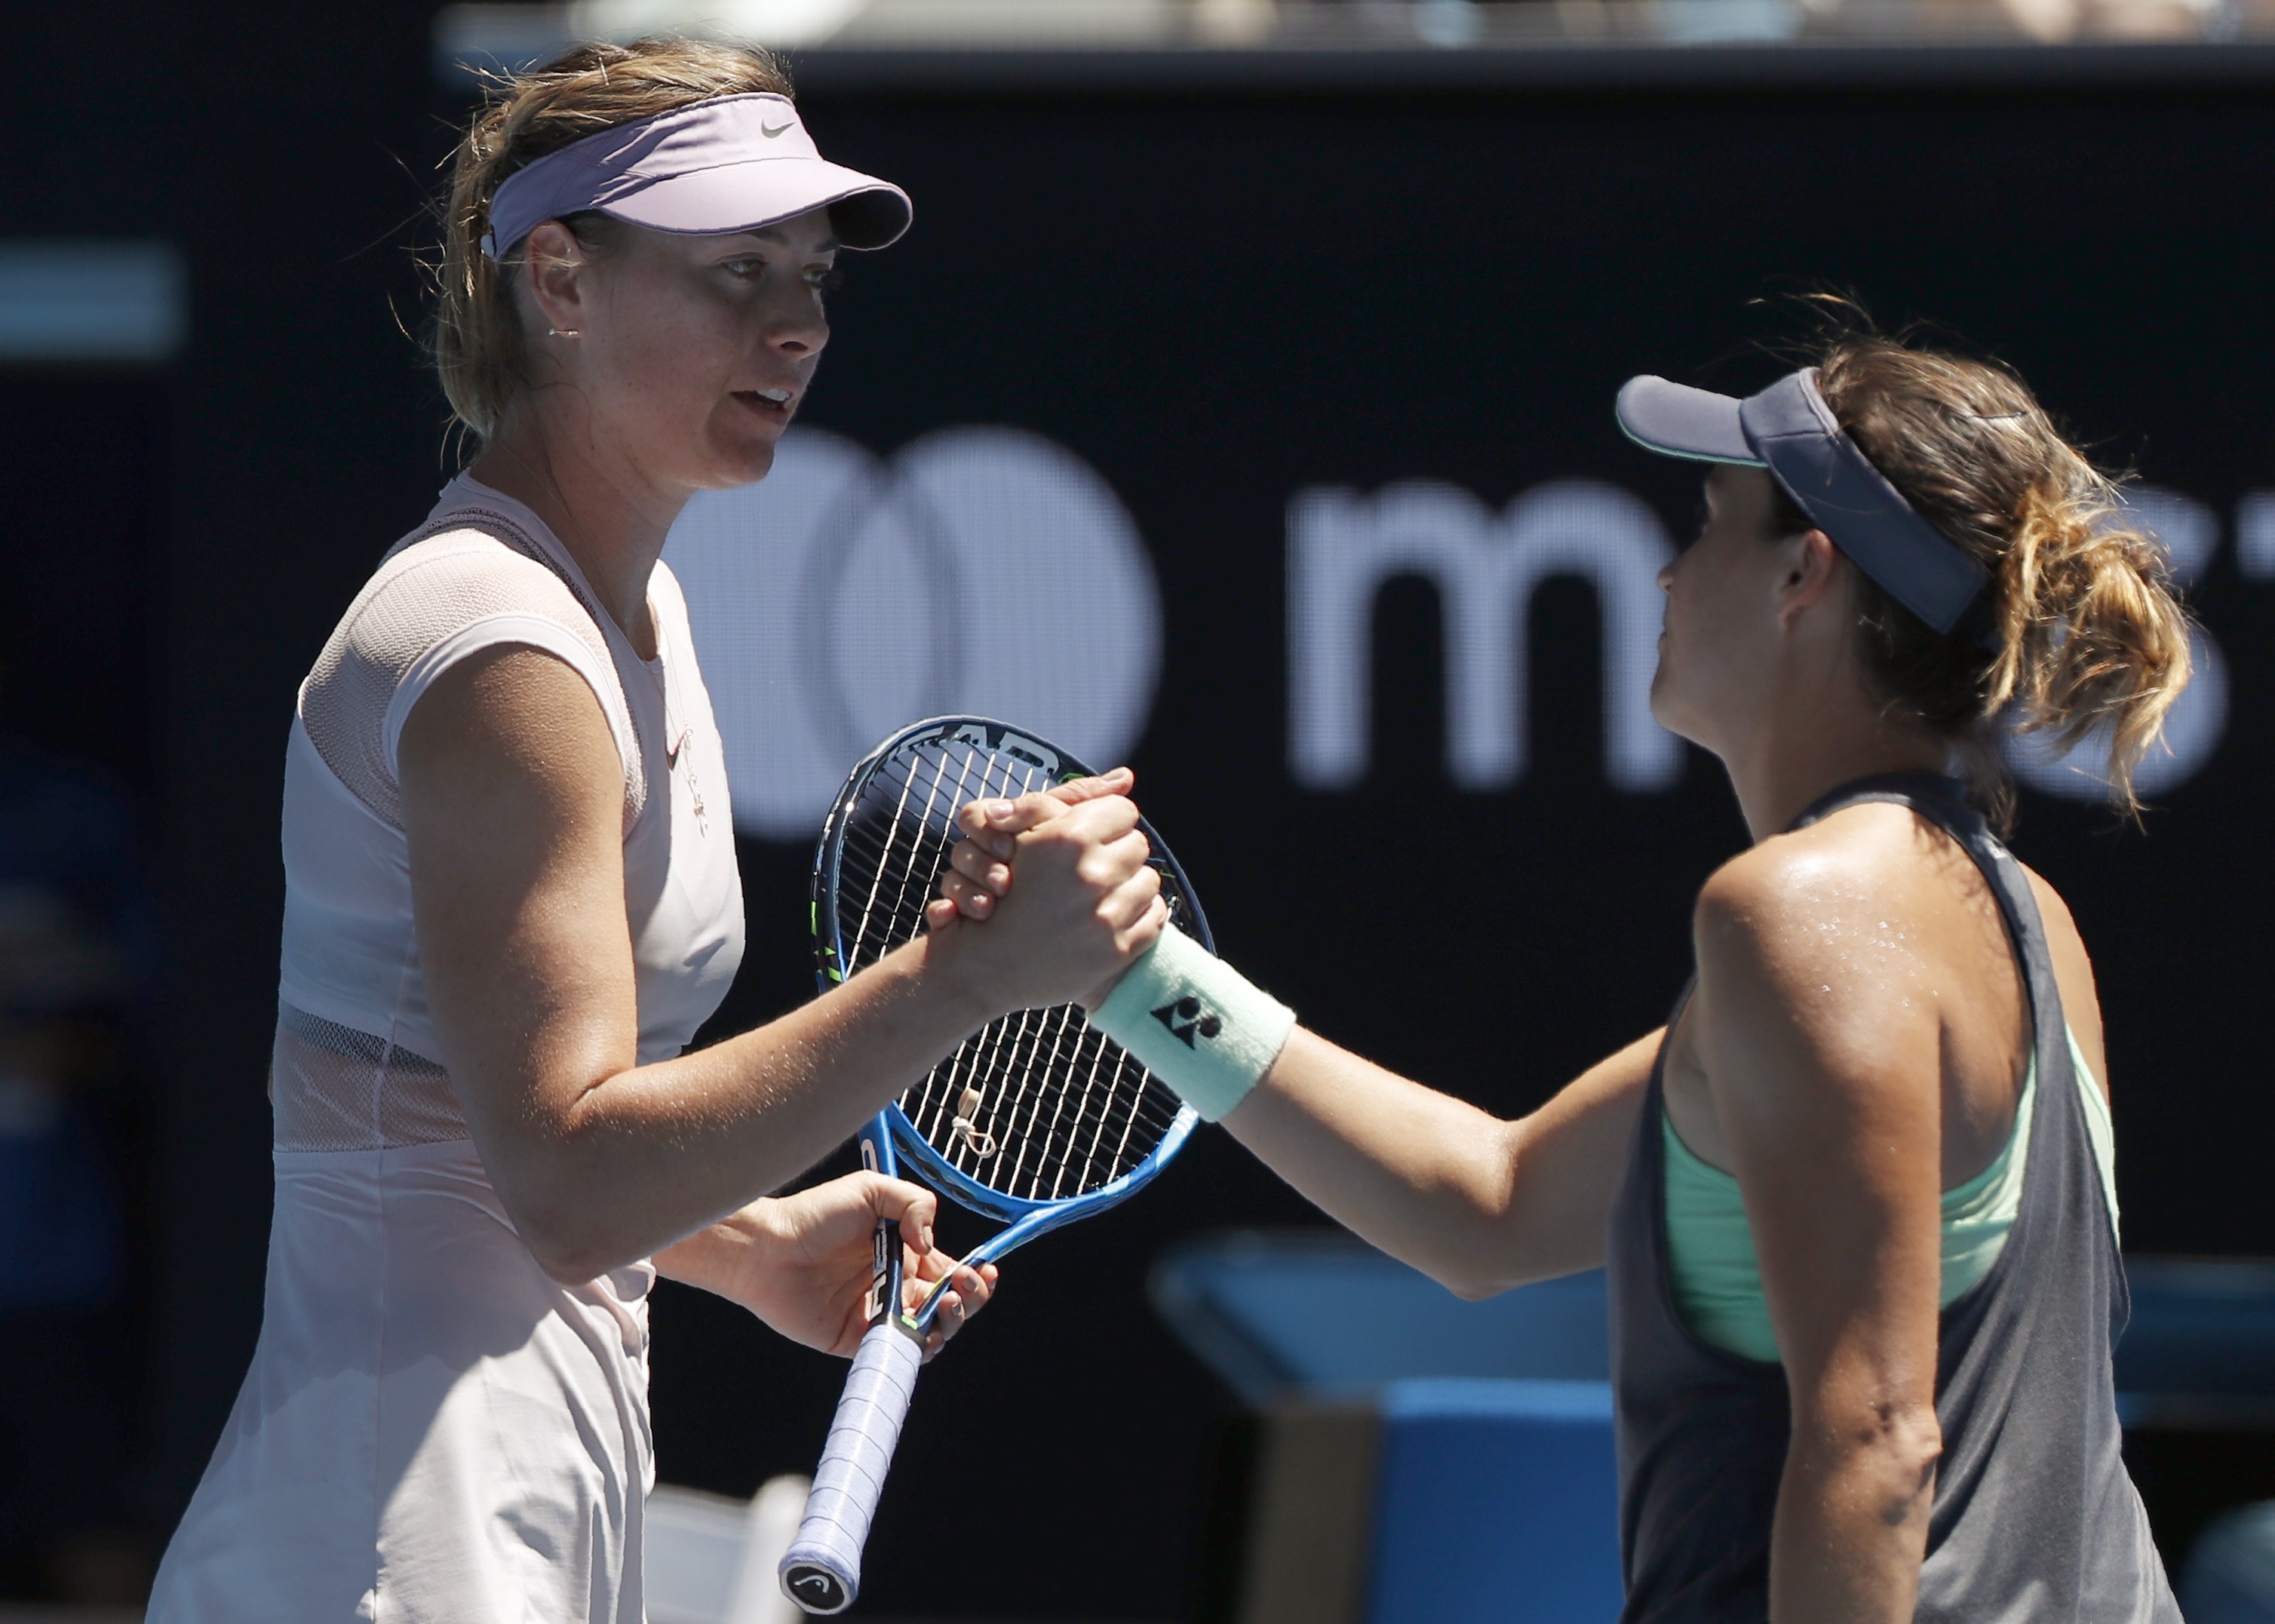 Tennis: Sharapova finds her groove on Melbourne return